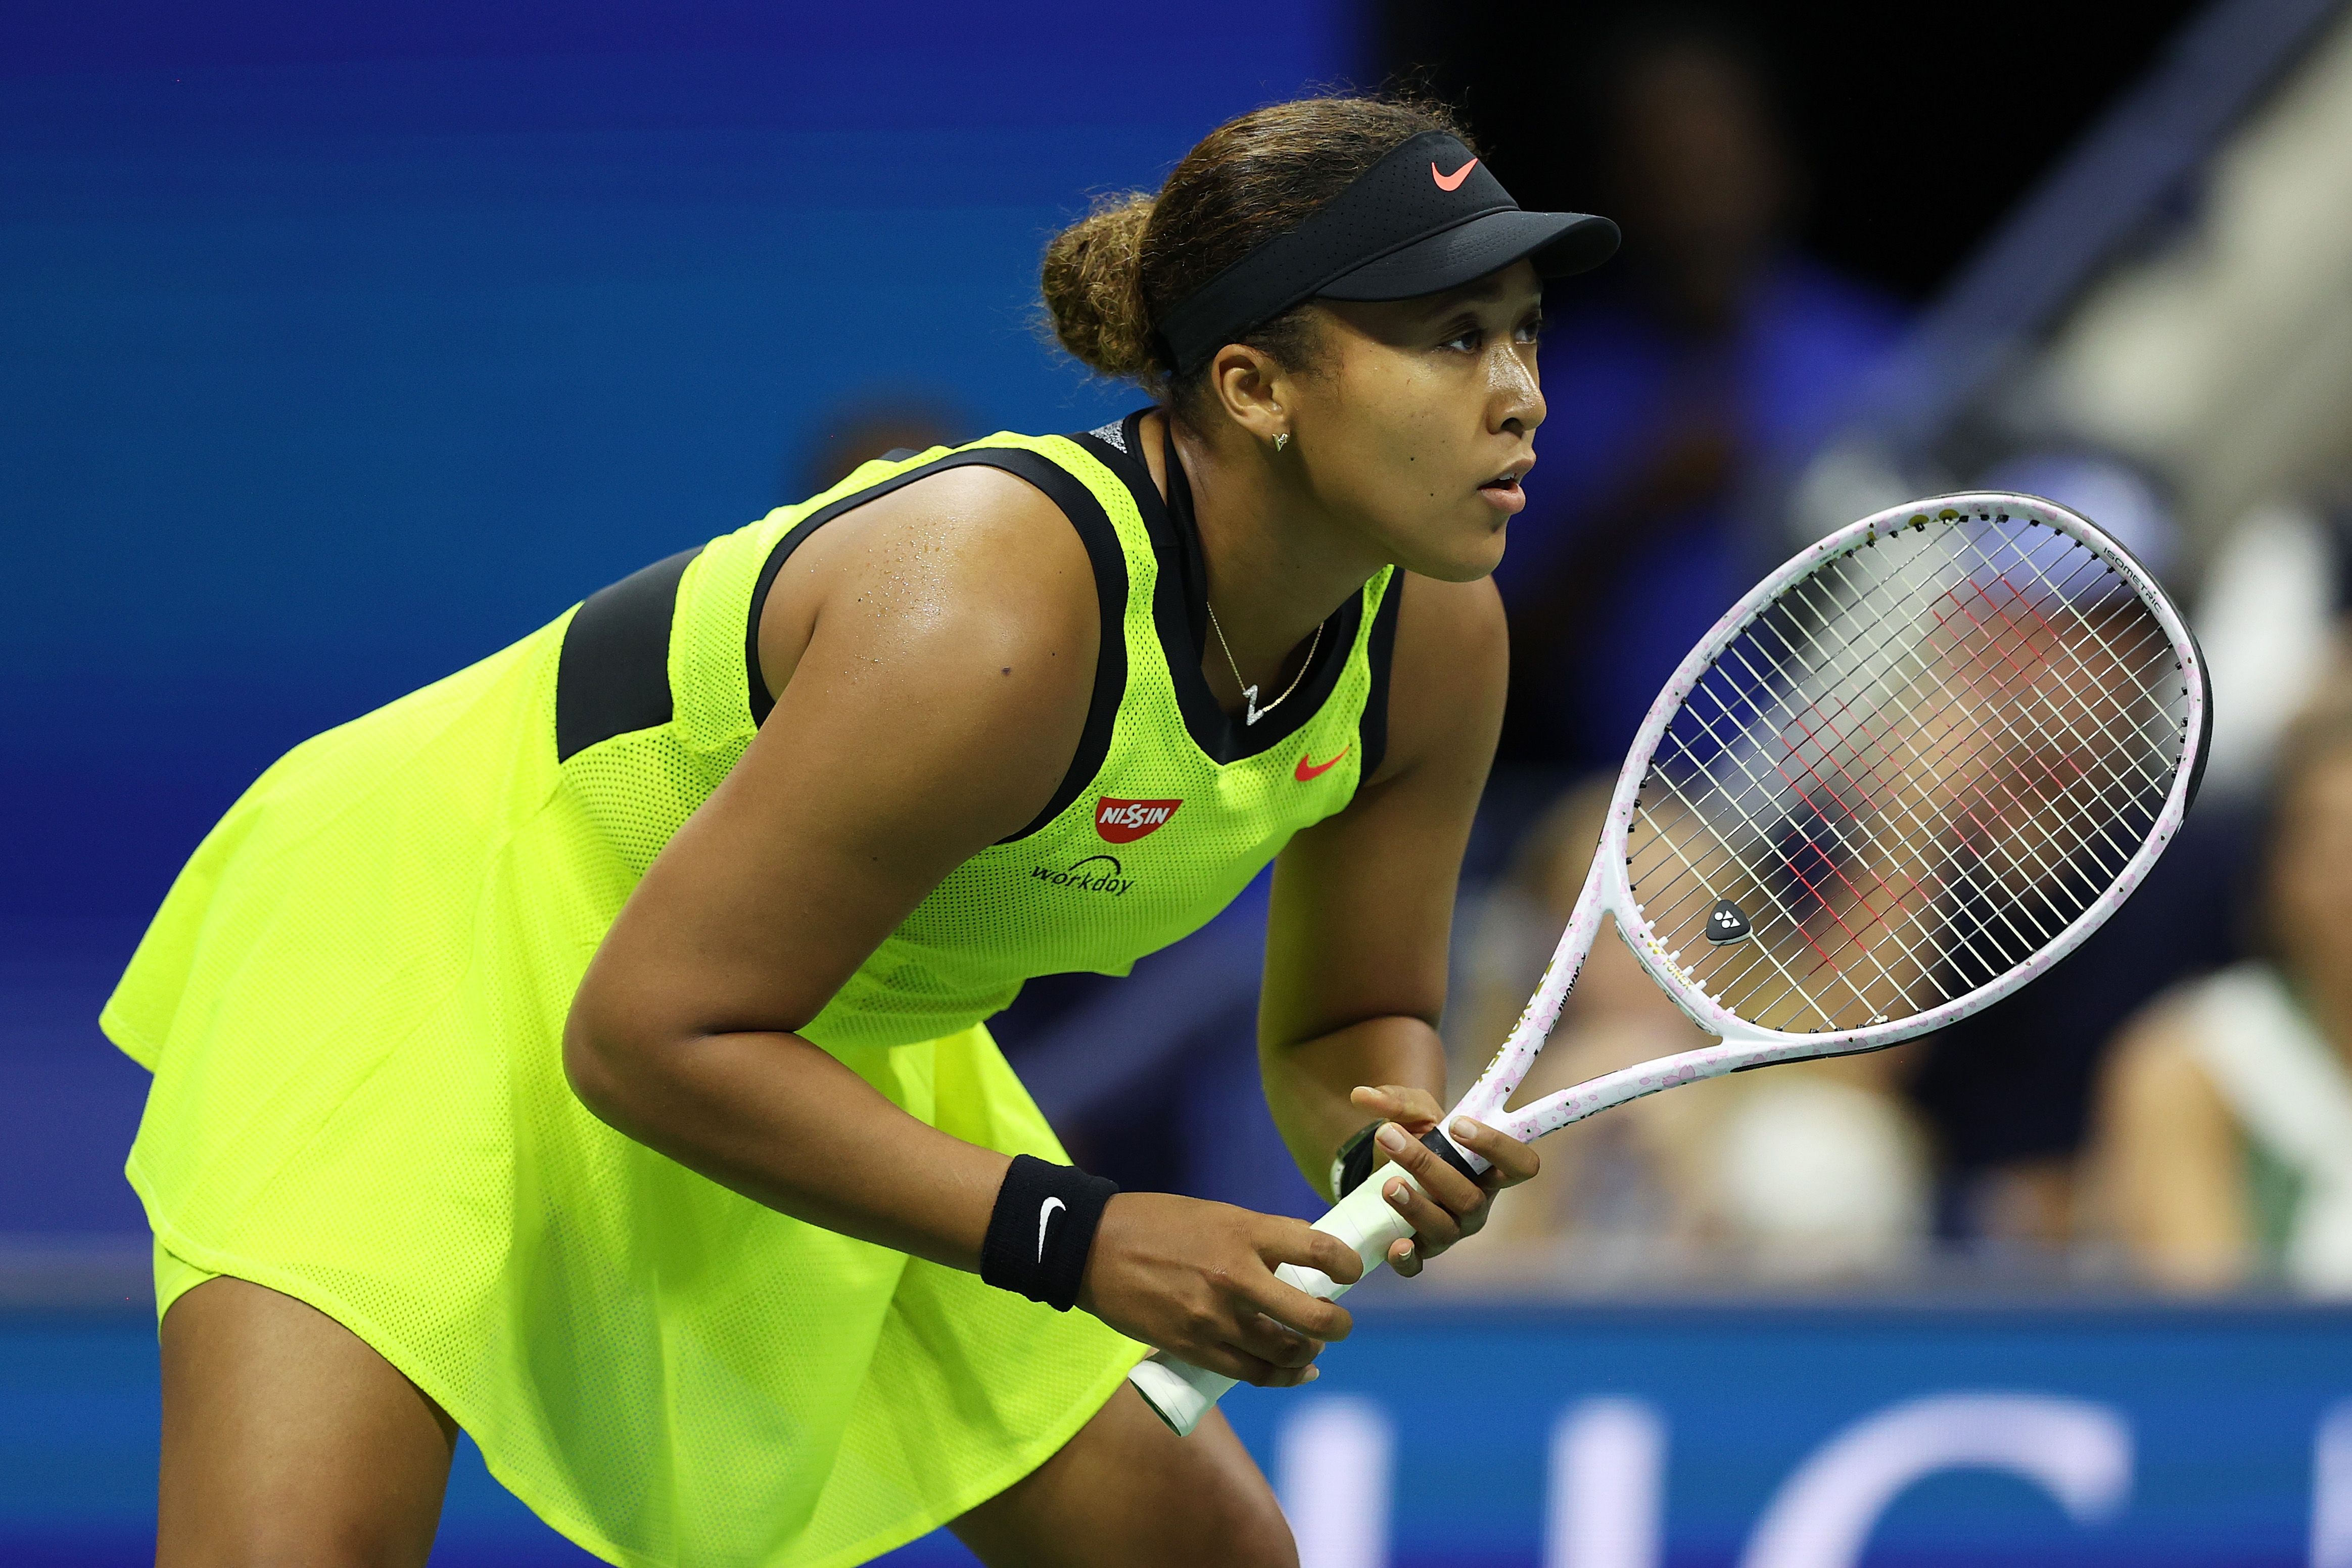 Tennis: Naomi Osaka dedicates win to fans in Japan, world amid